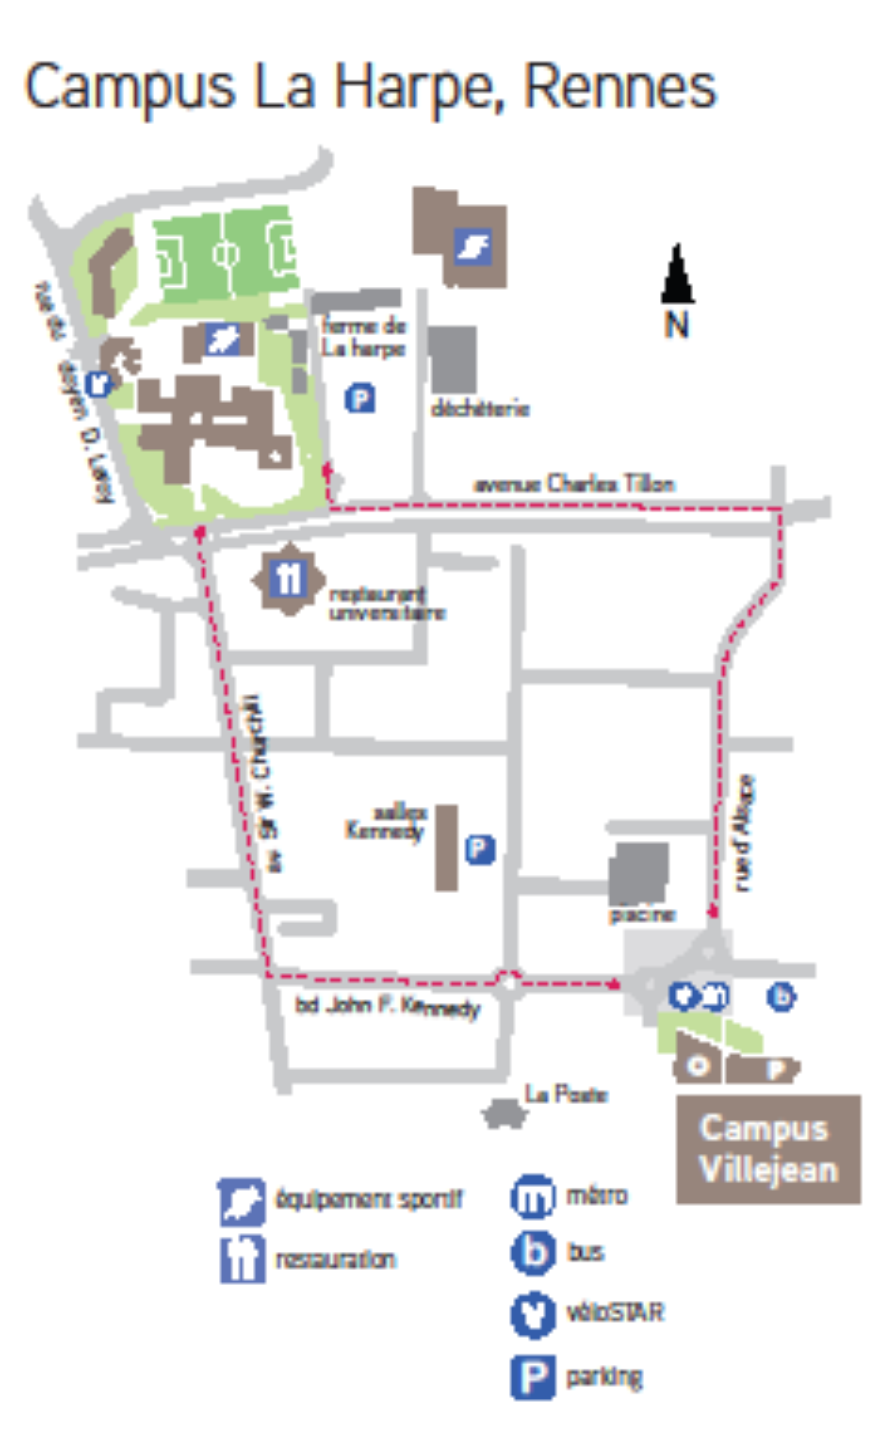 Plan du campus La Harpe